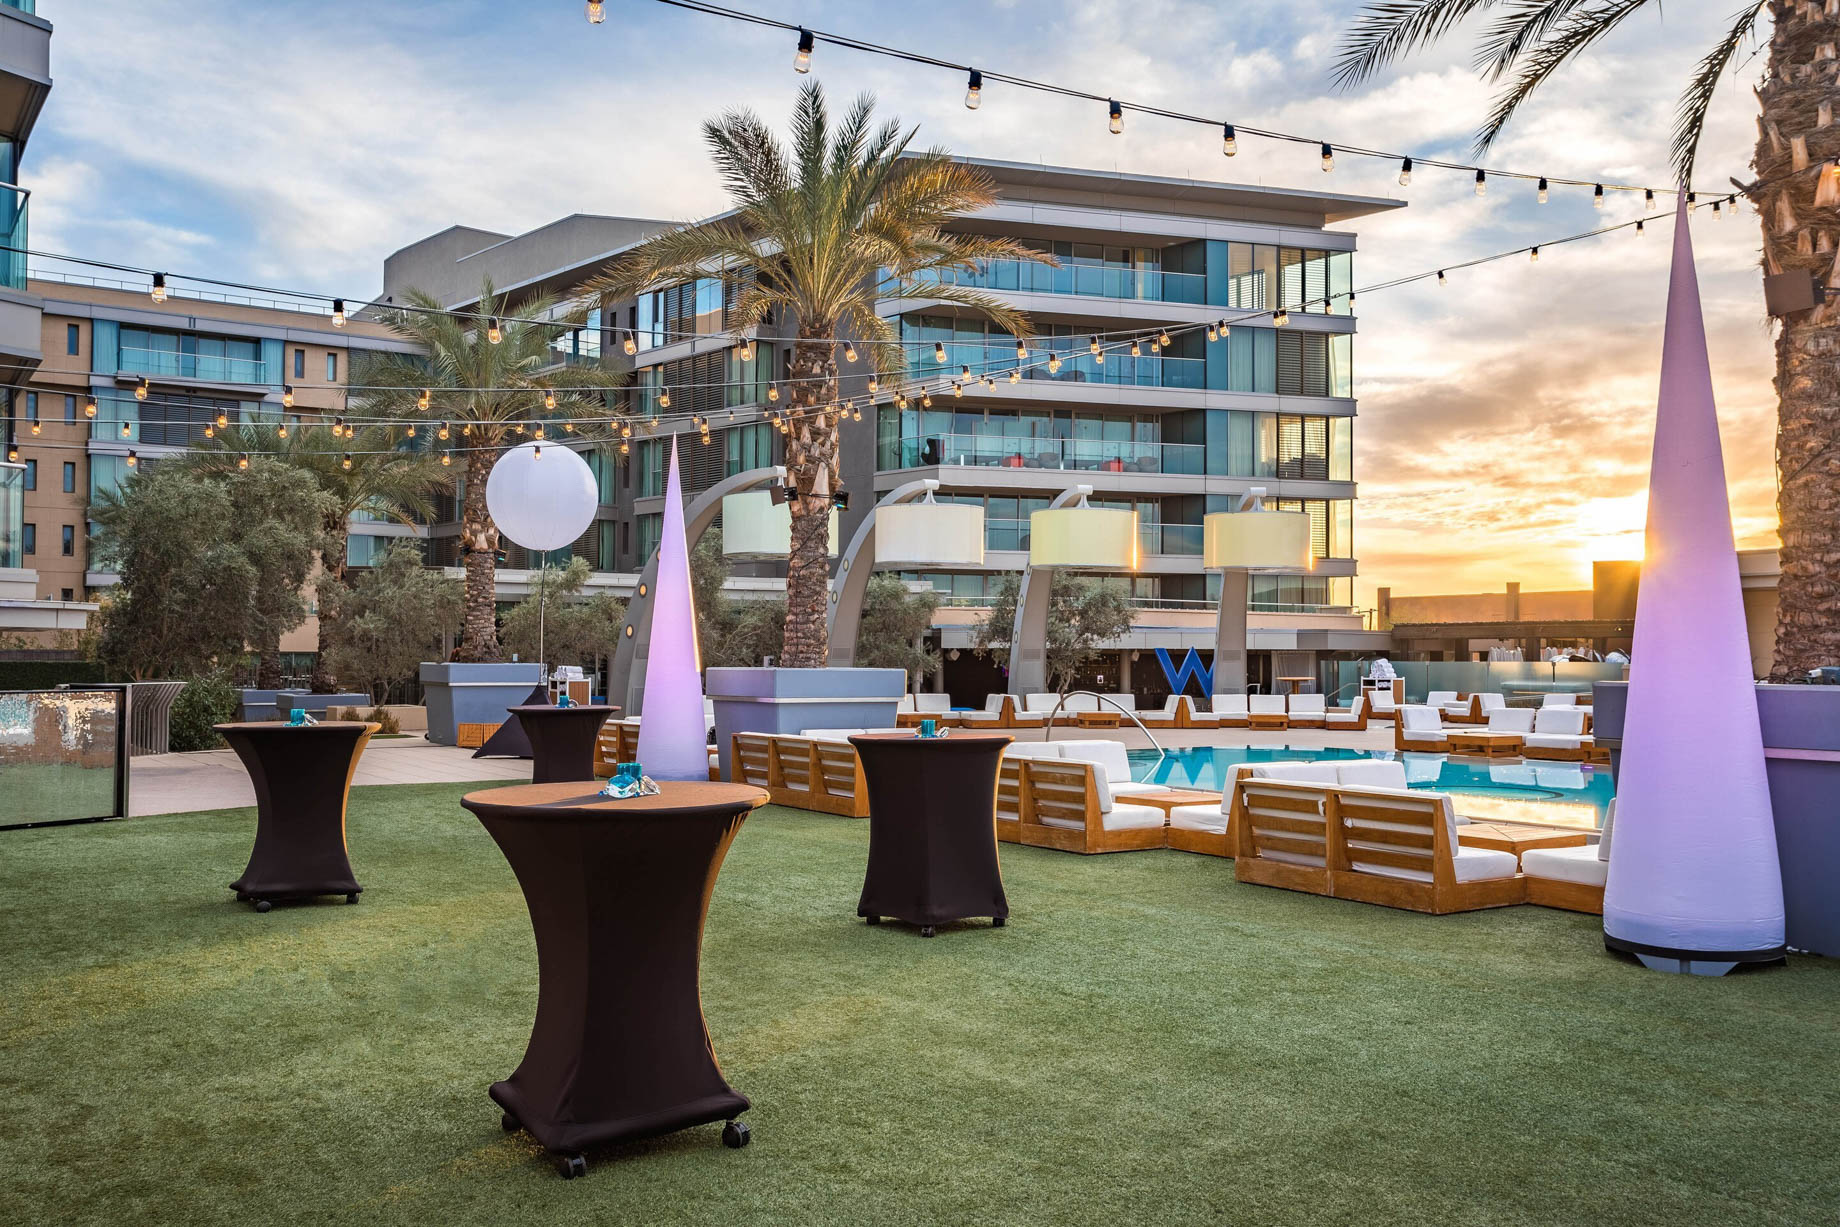 W Scottsdale Hotel – Scottsdale, AZ, USA – Sunset Lawn